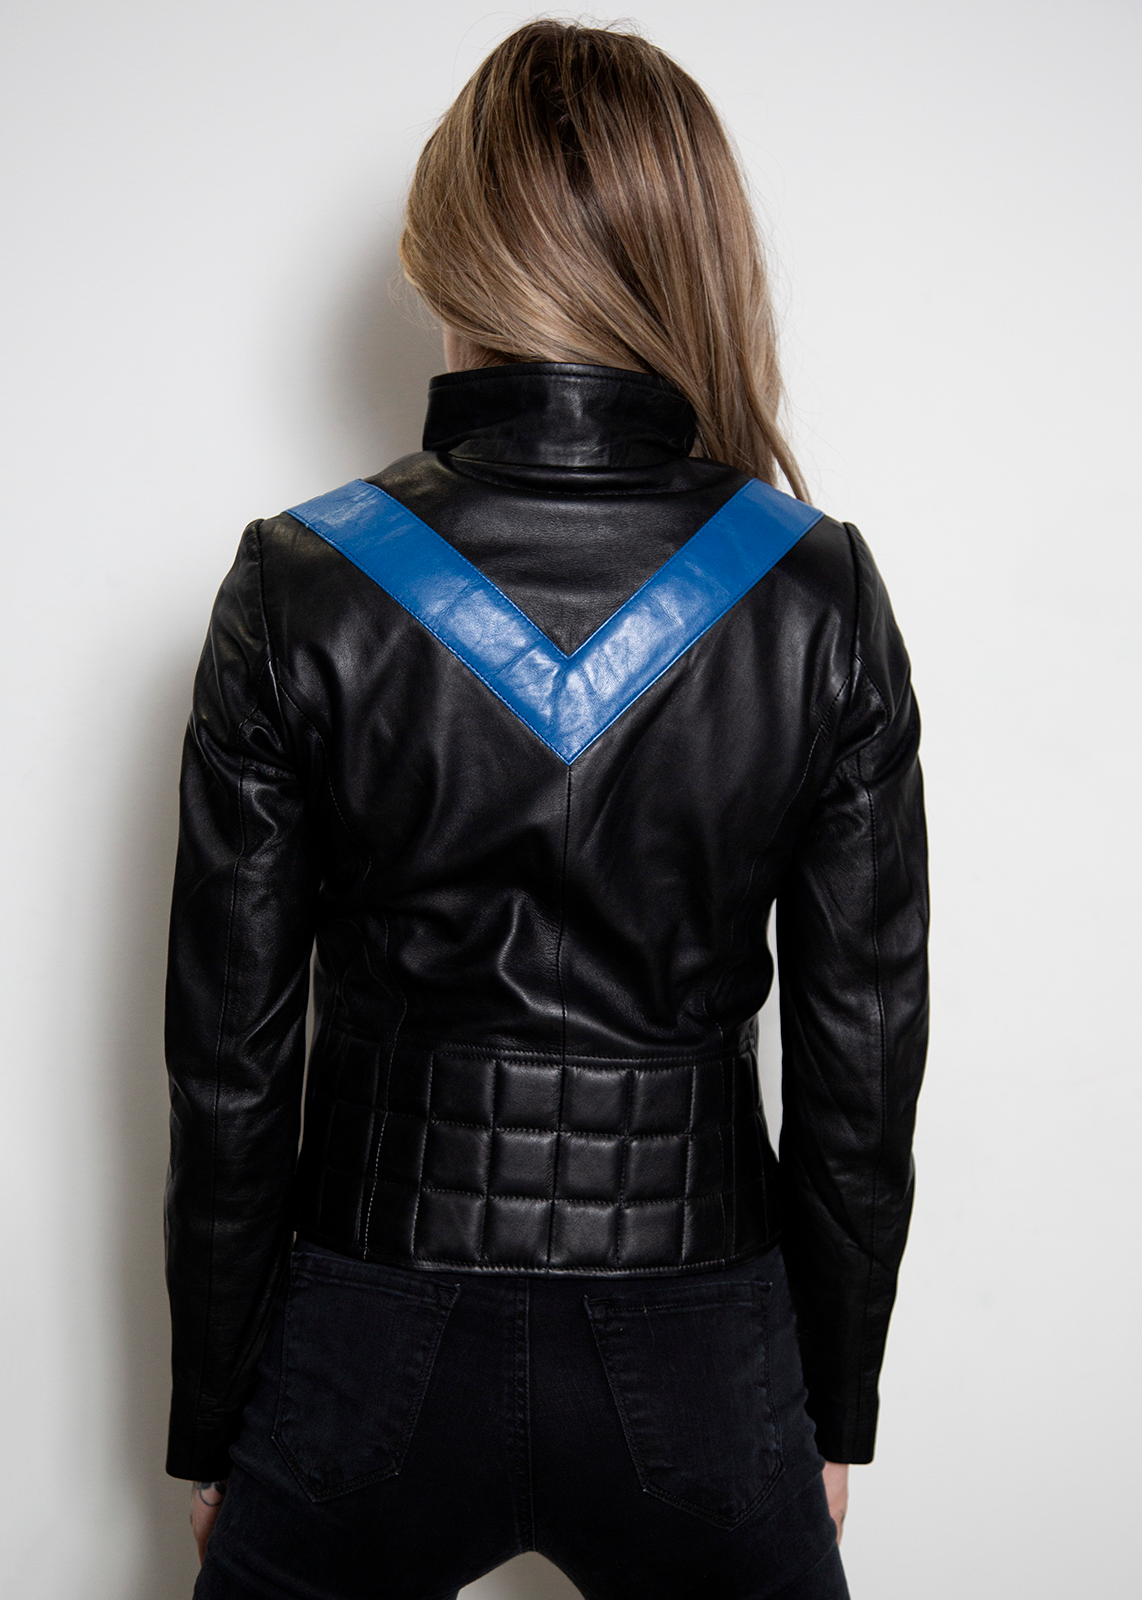 nightwing titans motorcycle leather jacket batman